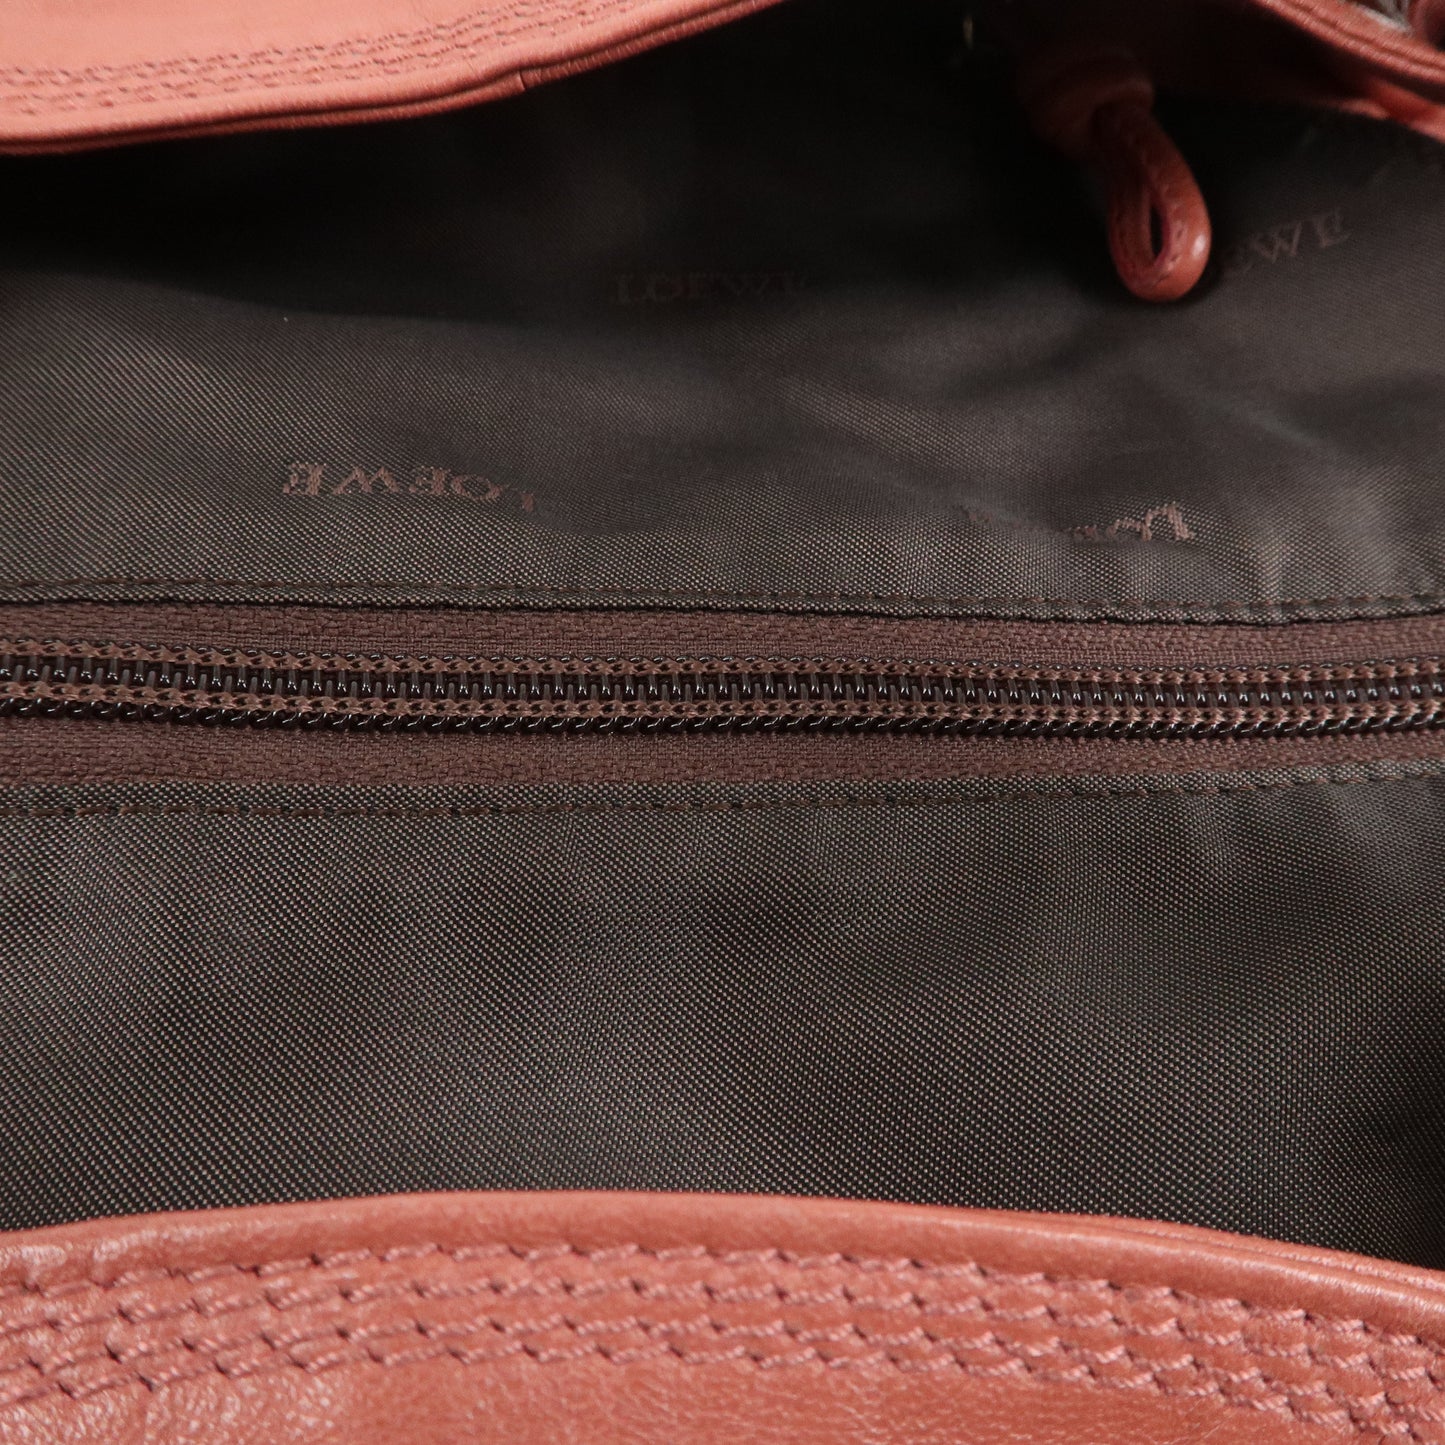 LOEWE Leather Nappa Aire Hand Bag Shoulder Bag Pink